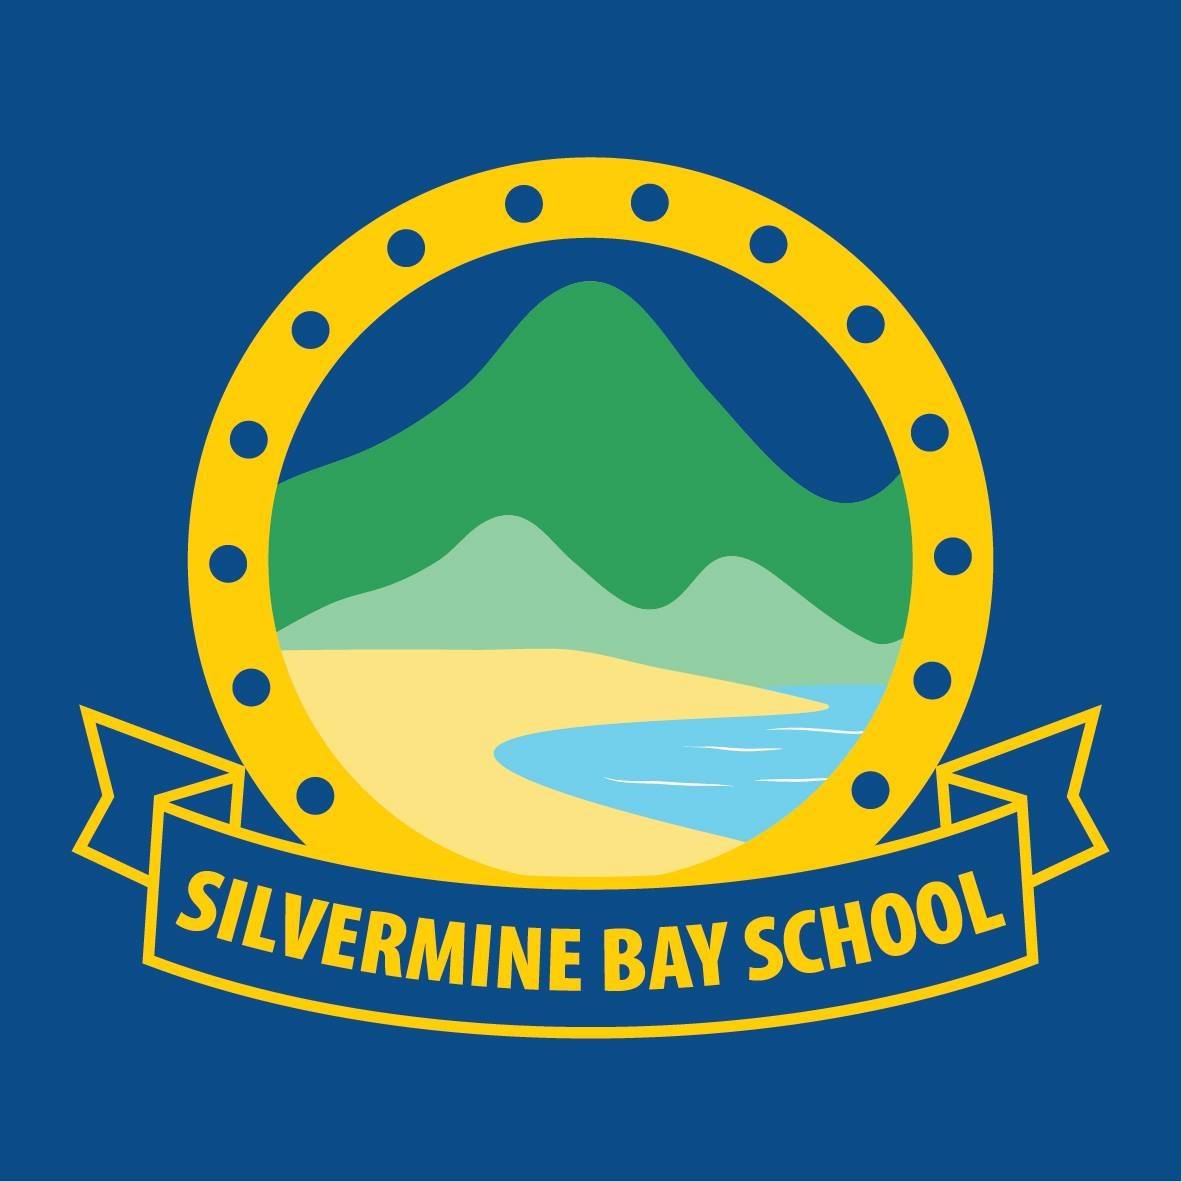 SILVERMINE BAY SCHOOL的校徽